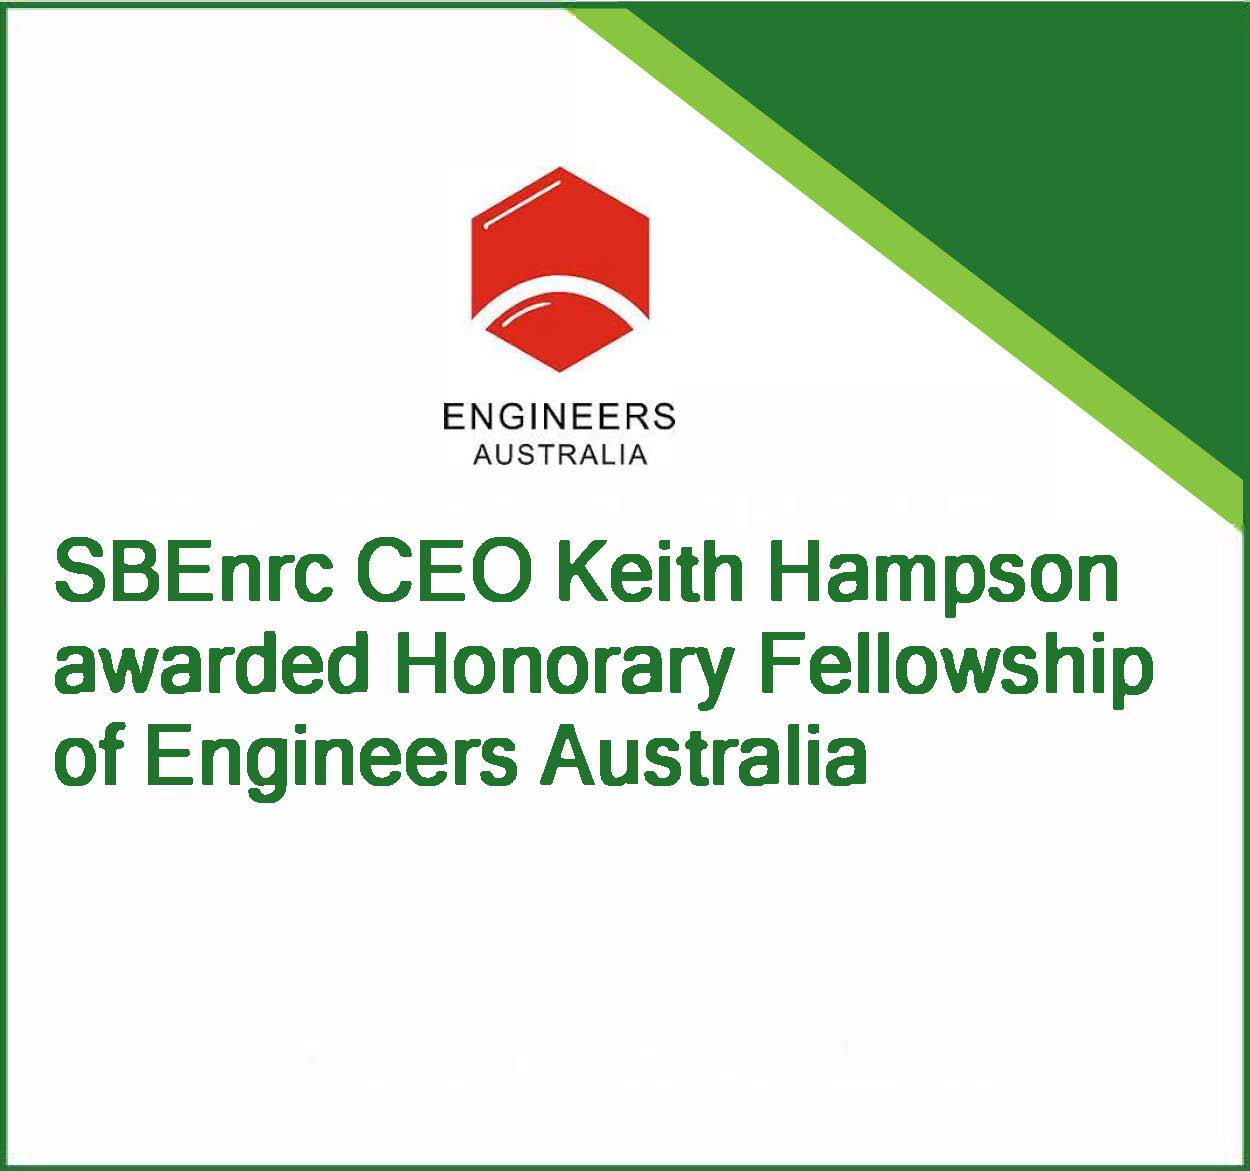 It’s an honour: SBEnrc CEO Keith Hampson awarded Honorary Fellowship of Engineers Australia